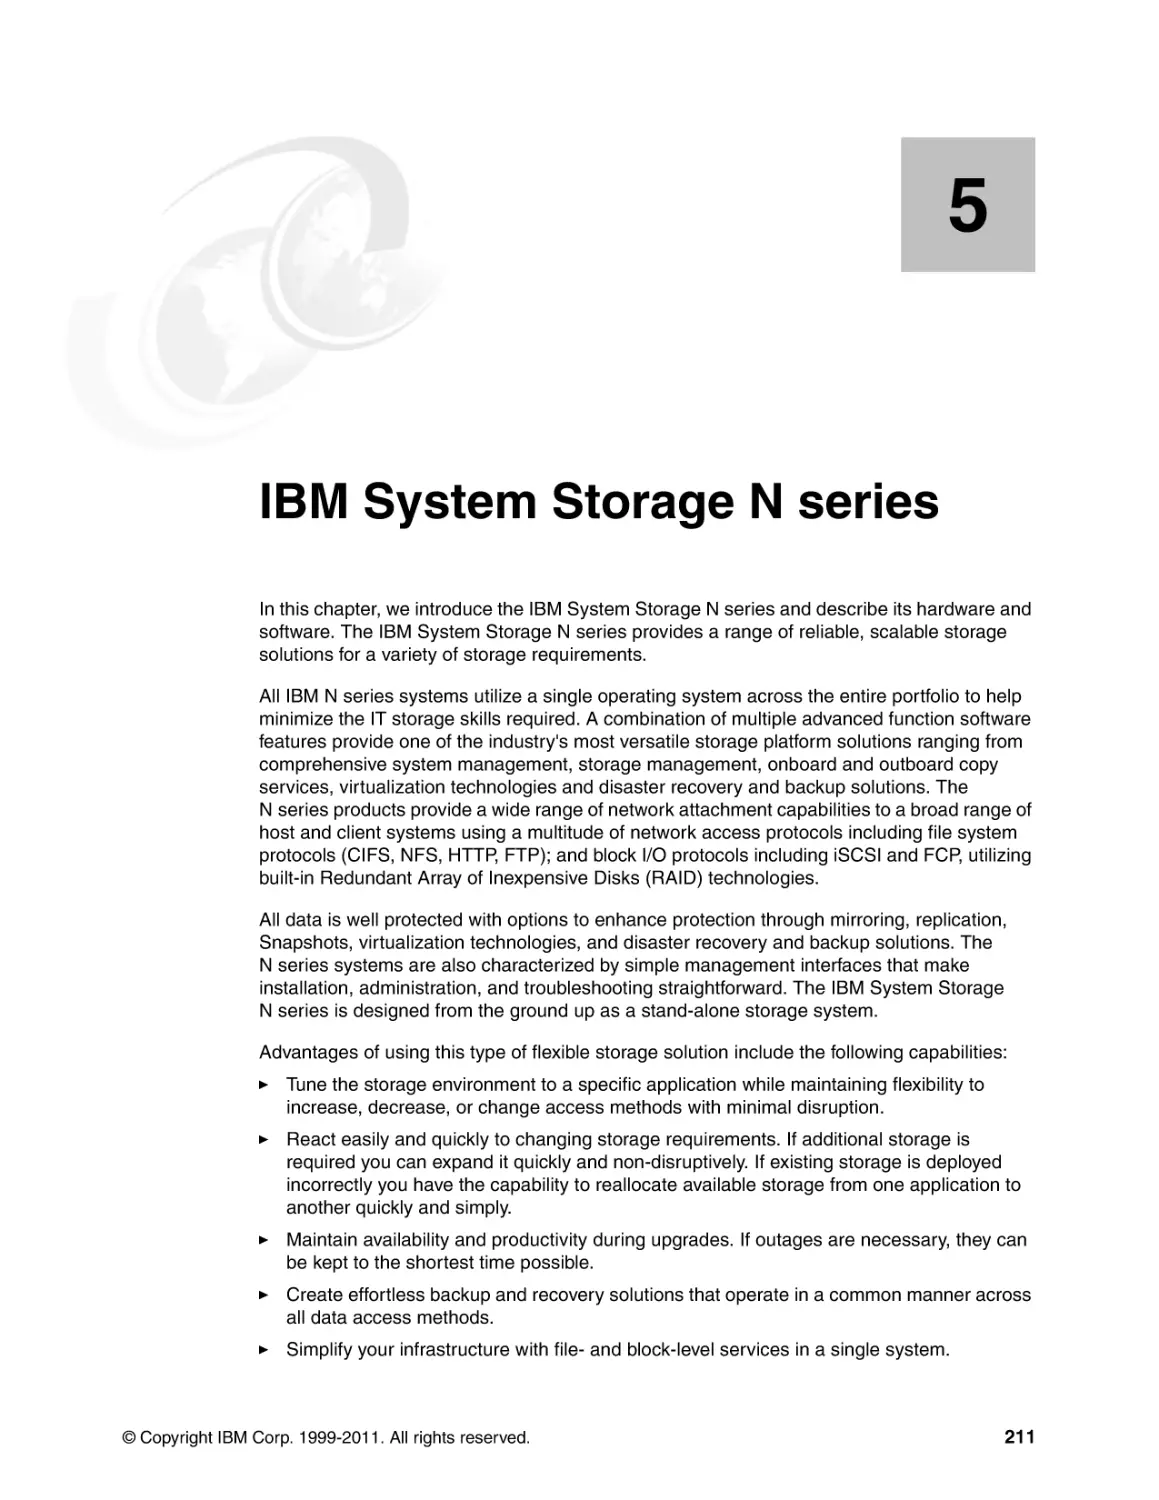 Chapter 5. IBM System Storage N series